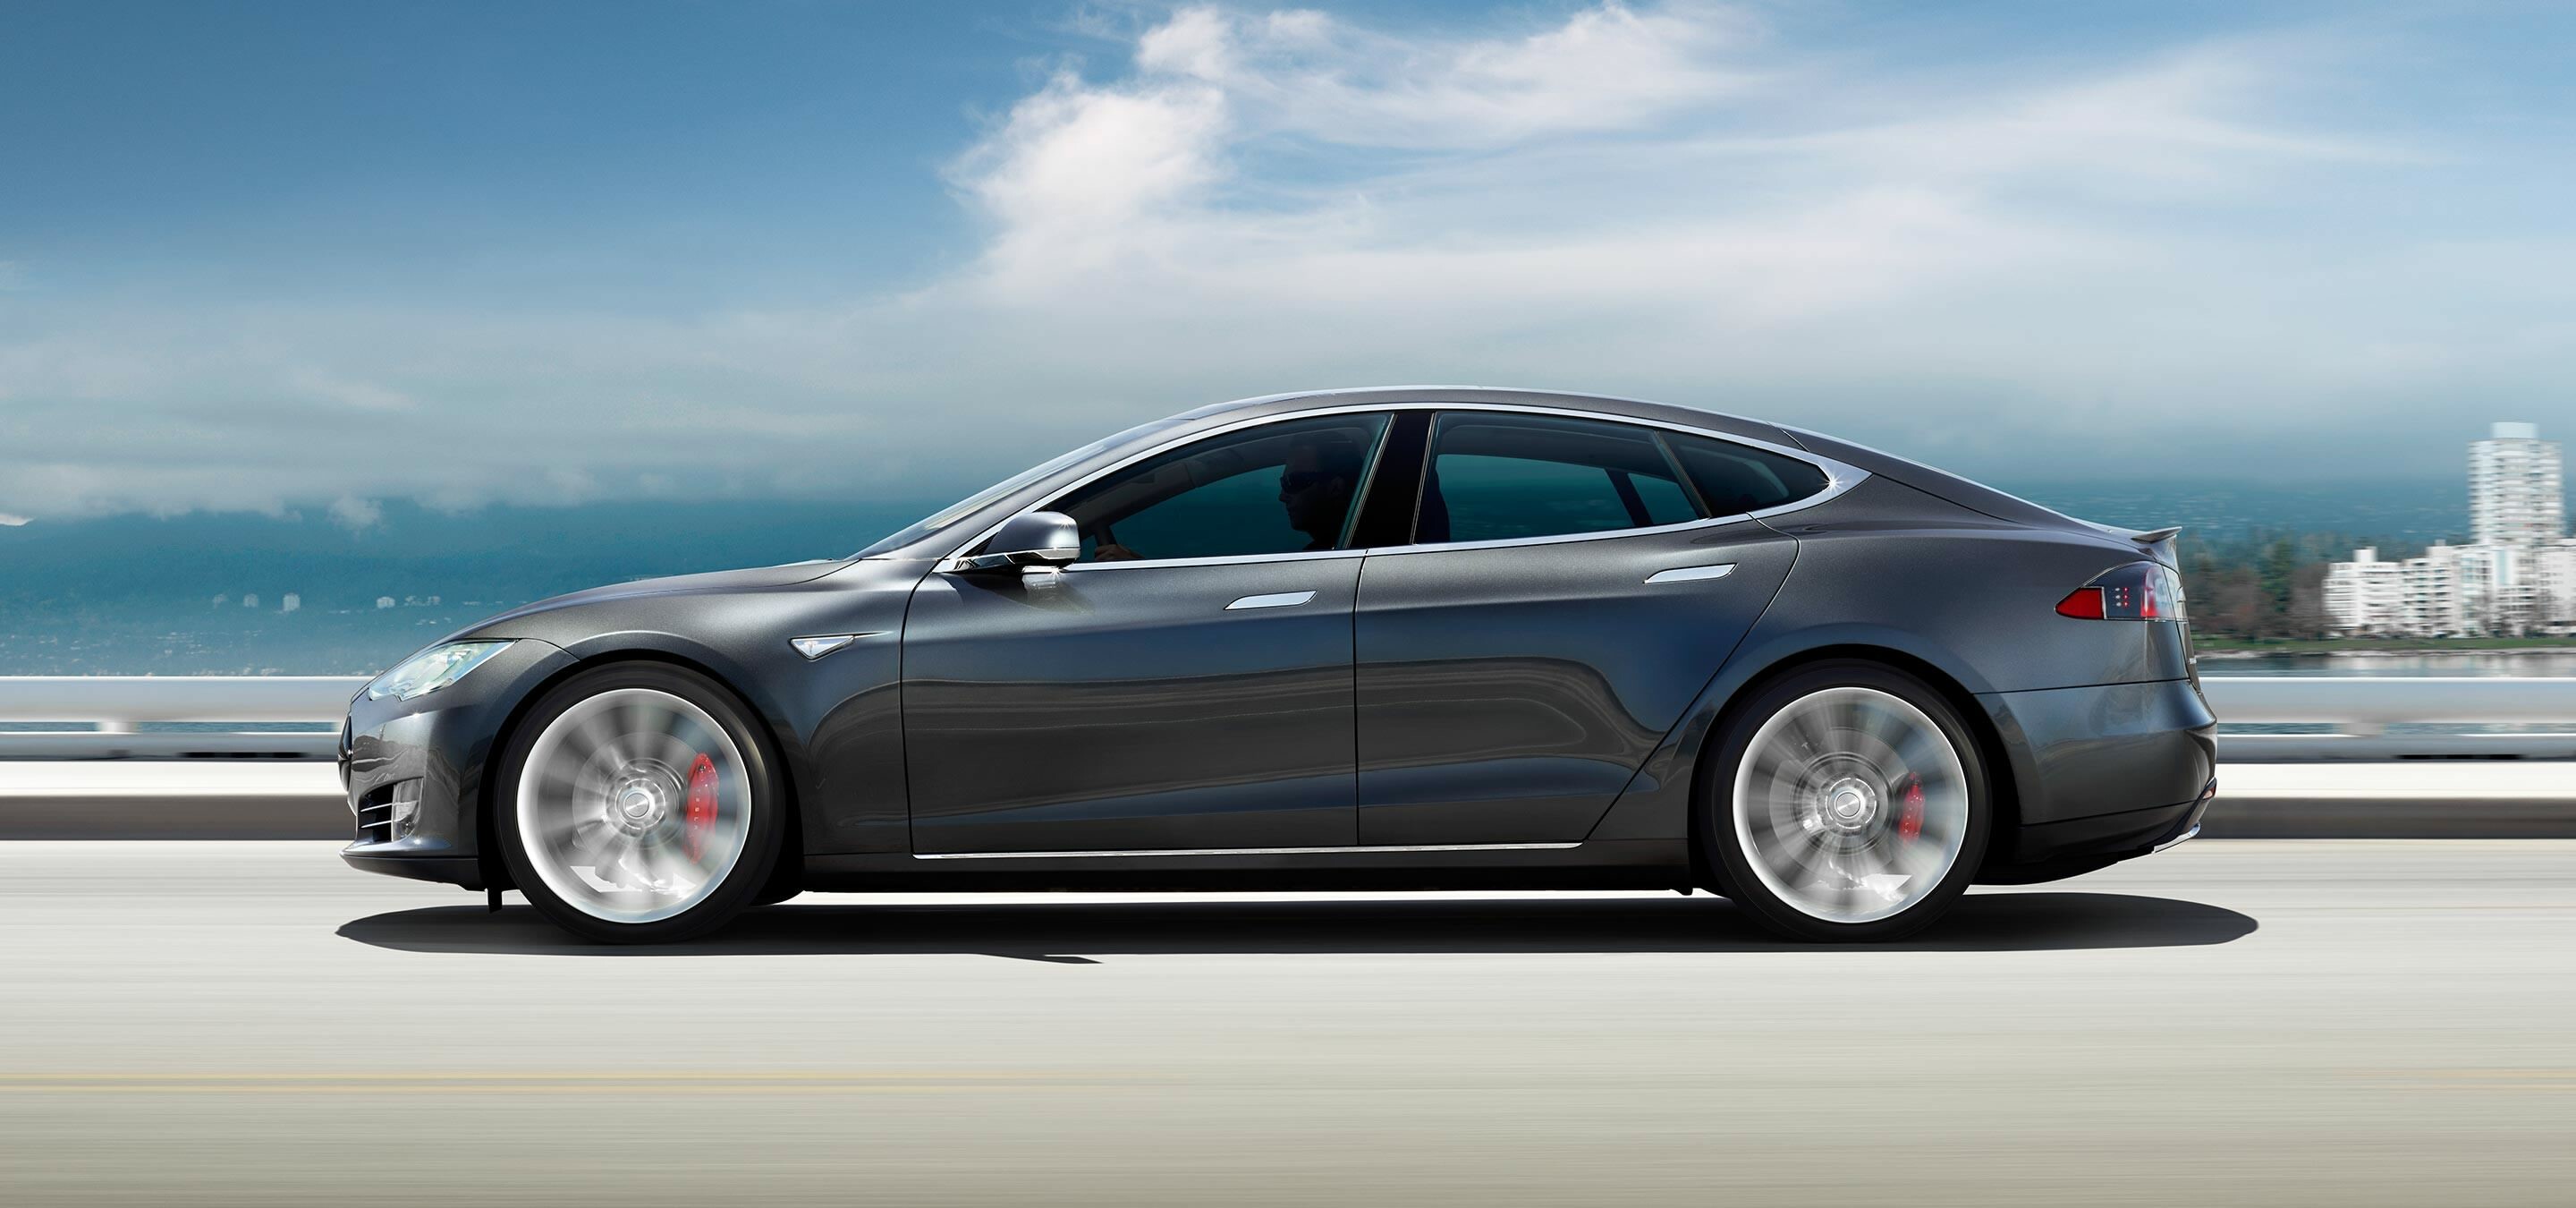 Tesla Model S: EV, Won the 2013 Motor Trend Car of the Year. 2880x1350 Dual Screen Wallpaper.